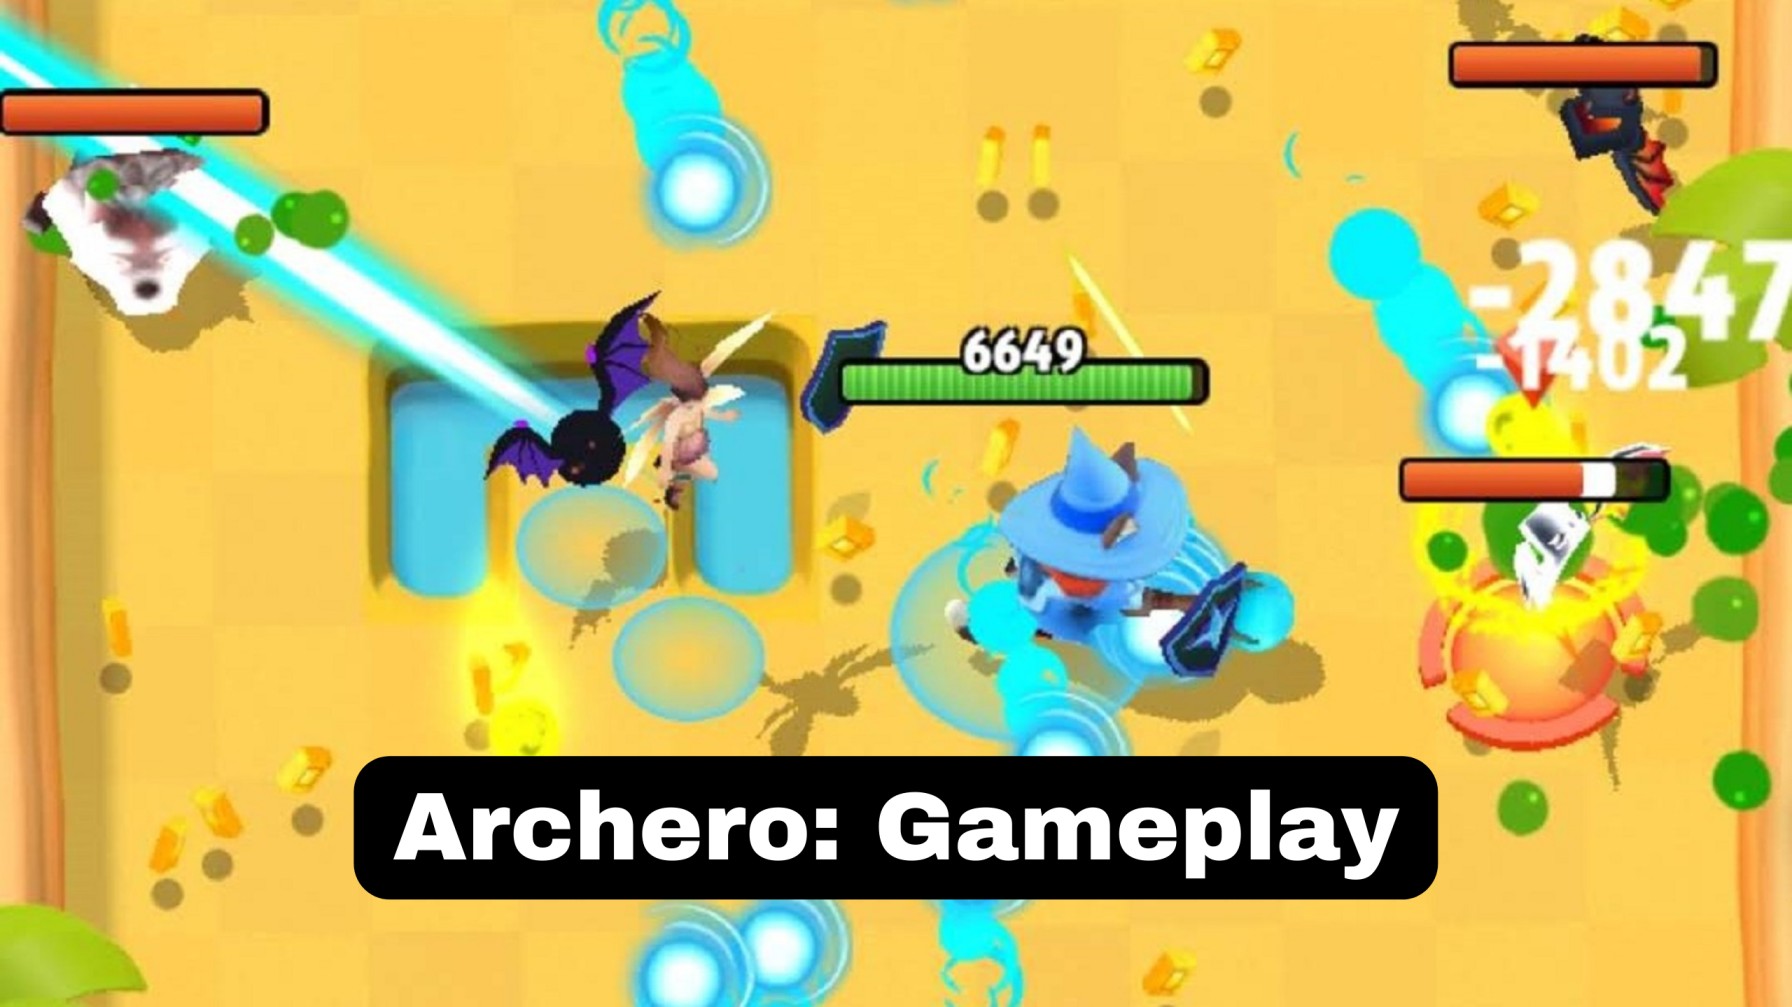 Archero: Gameplay